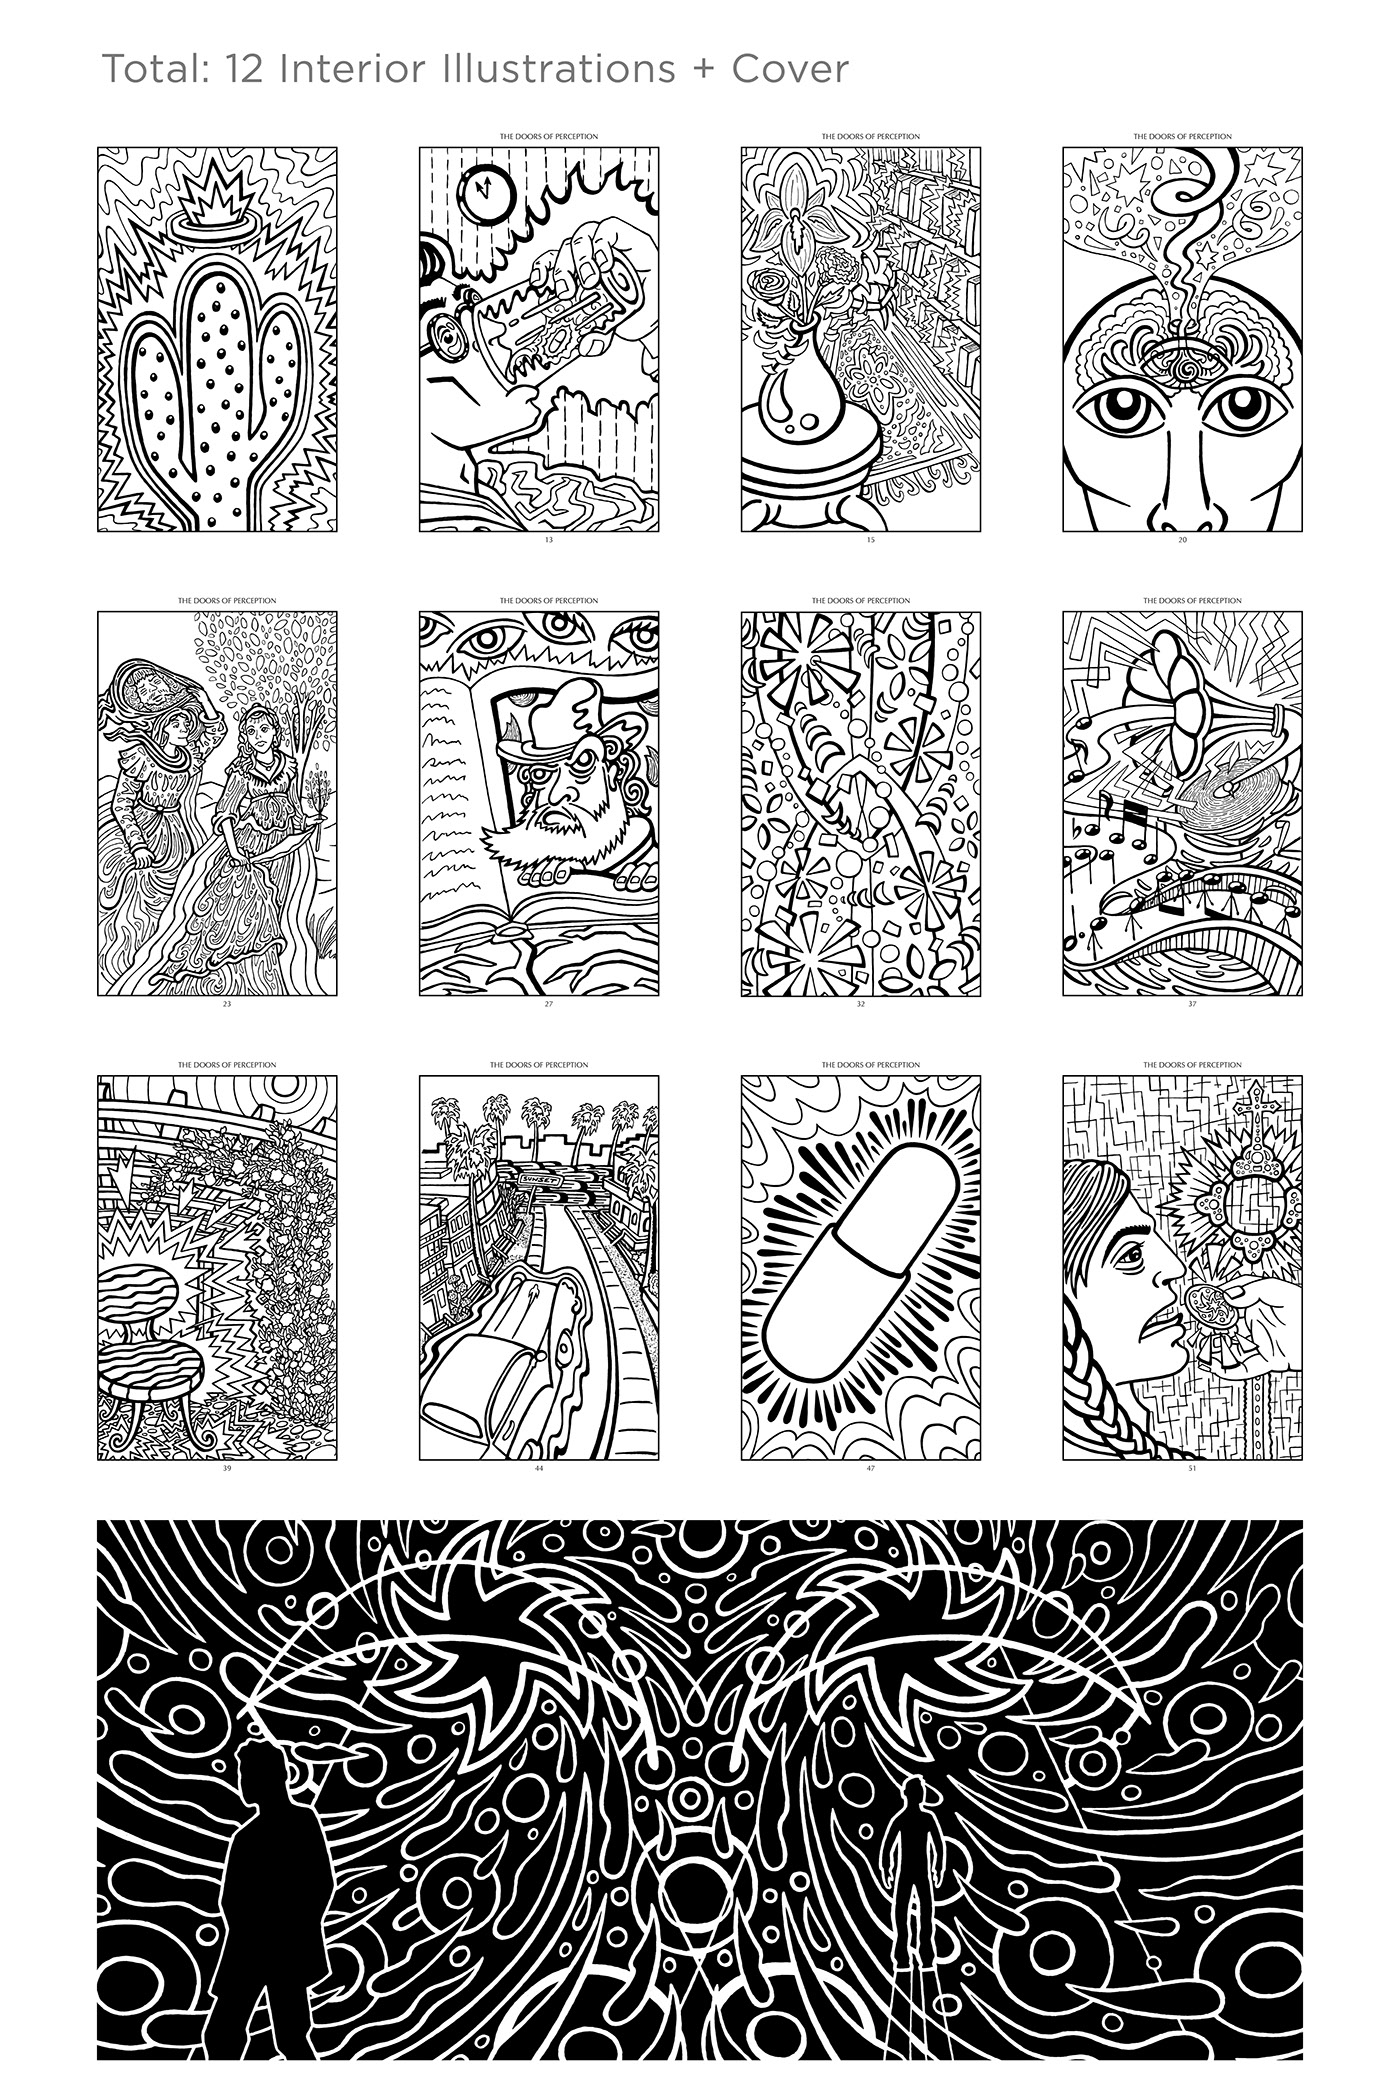 pratt prattcomd illustrations pen ink aldoushuxley TheDoorsofPerception mescaline Huxley visualnarrative psychadelic parapsychology psychology philosophy 